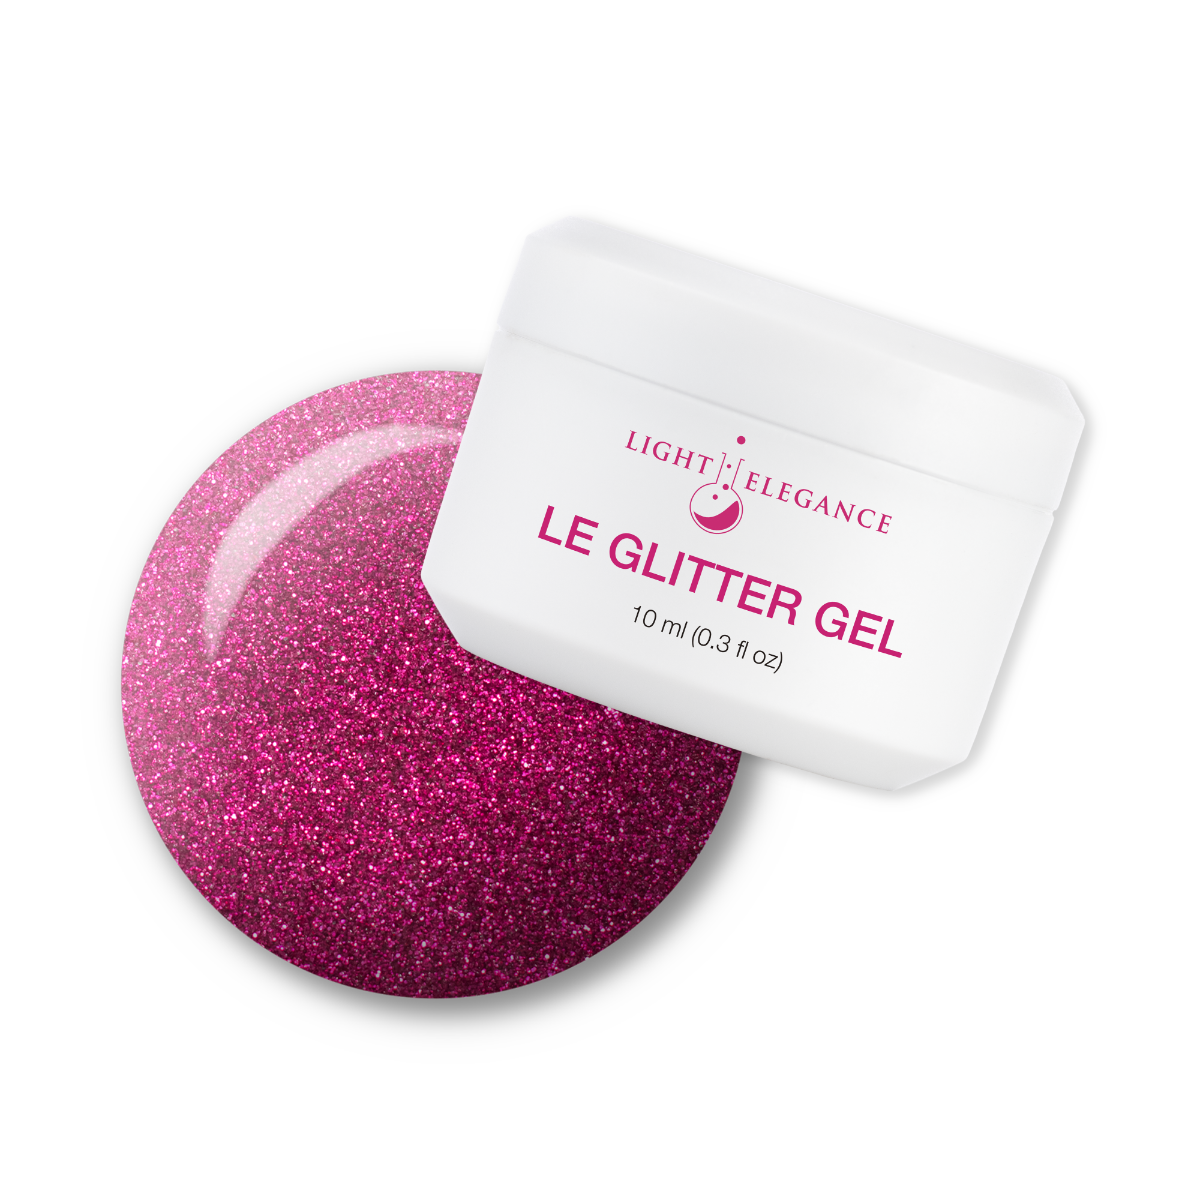 Light Elegance Glitter Gel - You're a Gem - Creata Beauty - Professional Beauty Products